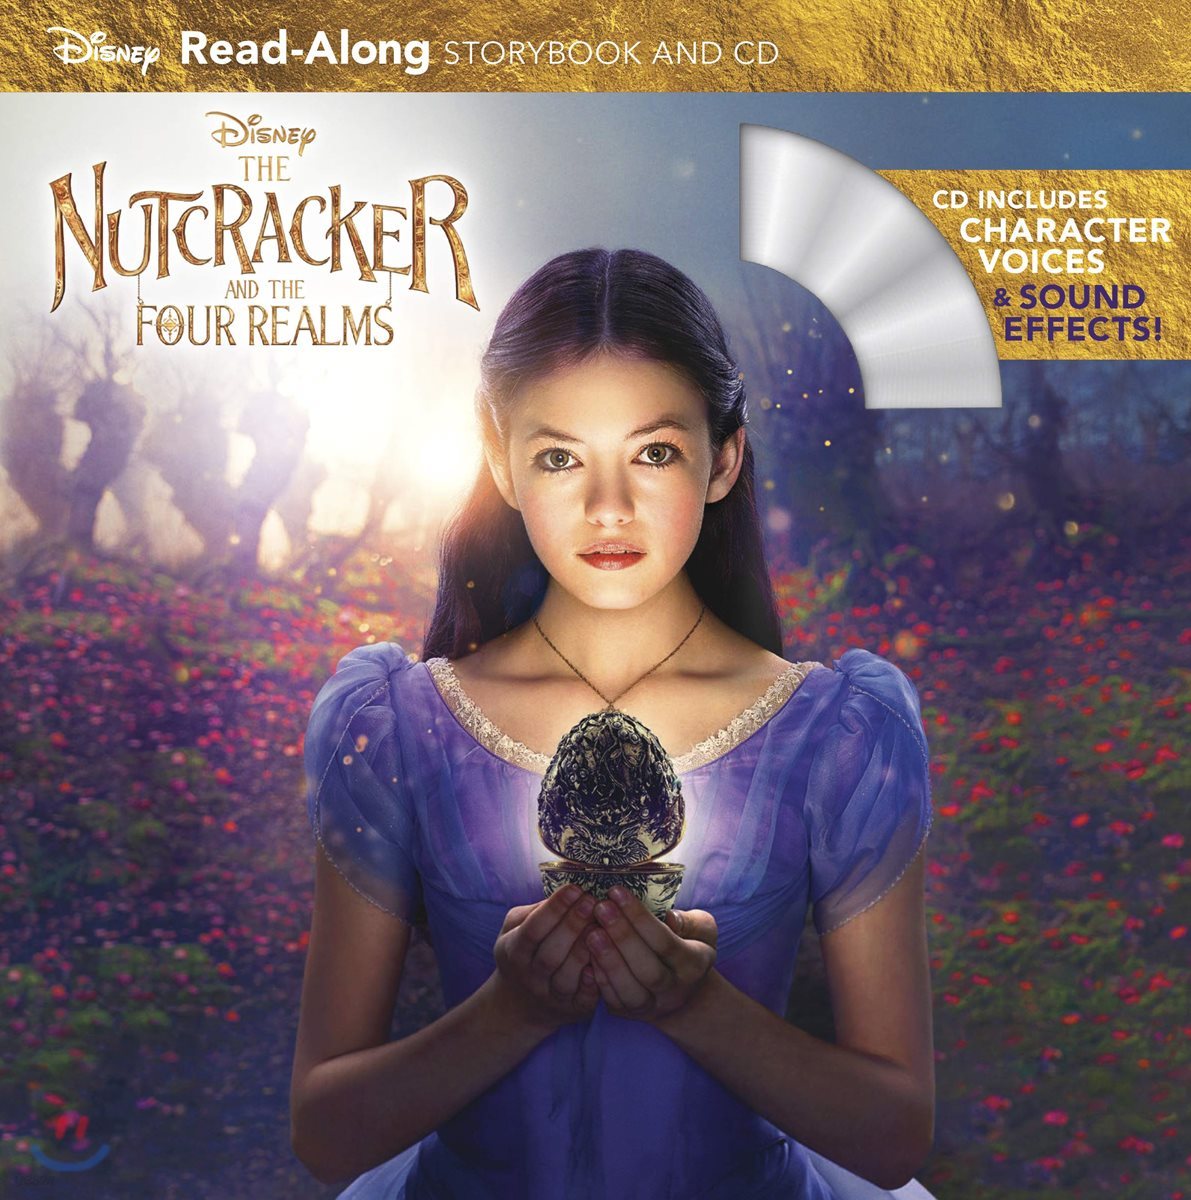 The Nutcracker and the Four Realms : Read-Along Storybook and CD : 디즈니 '호두까기 인형과 4개의 왕국' 리드얼롱 스토리북